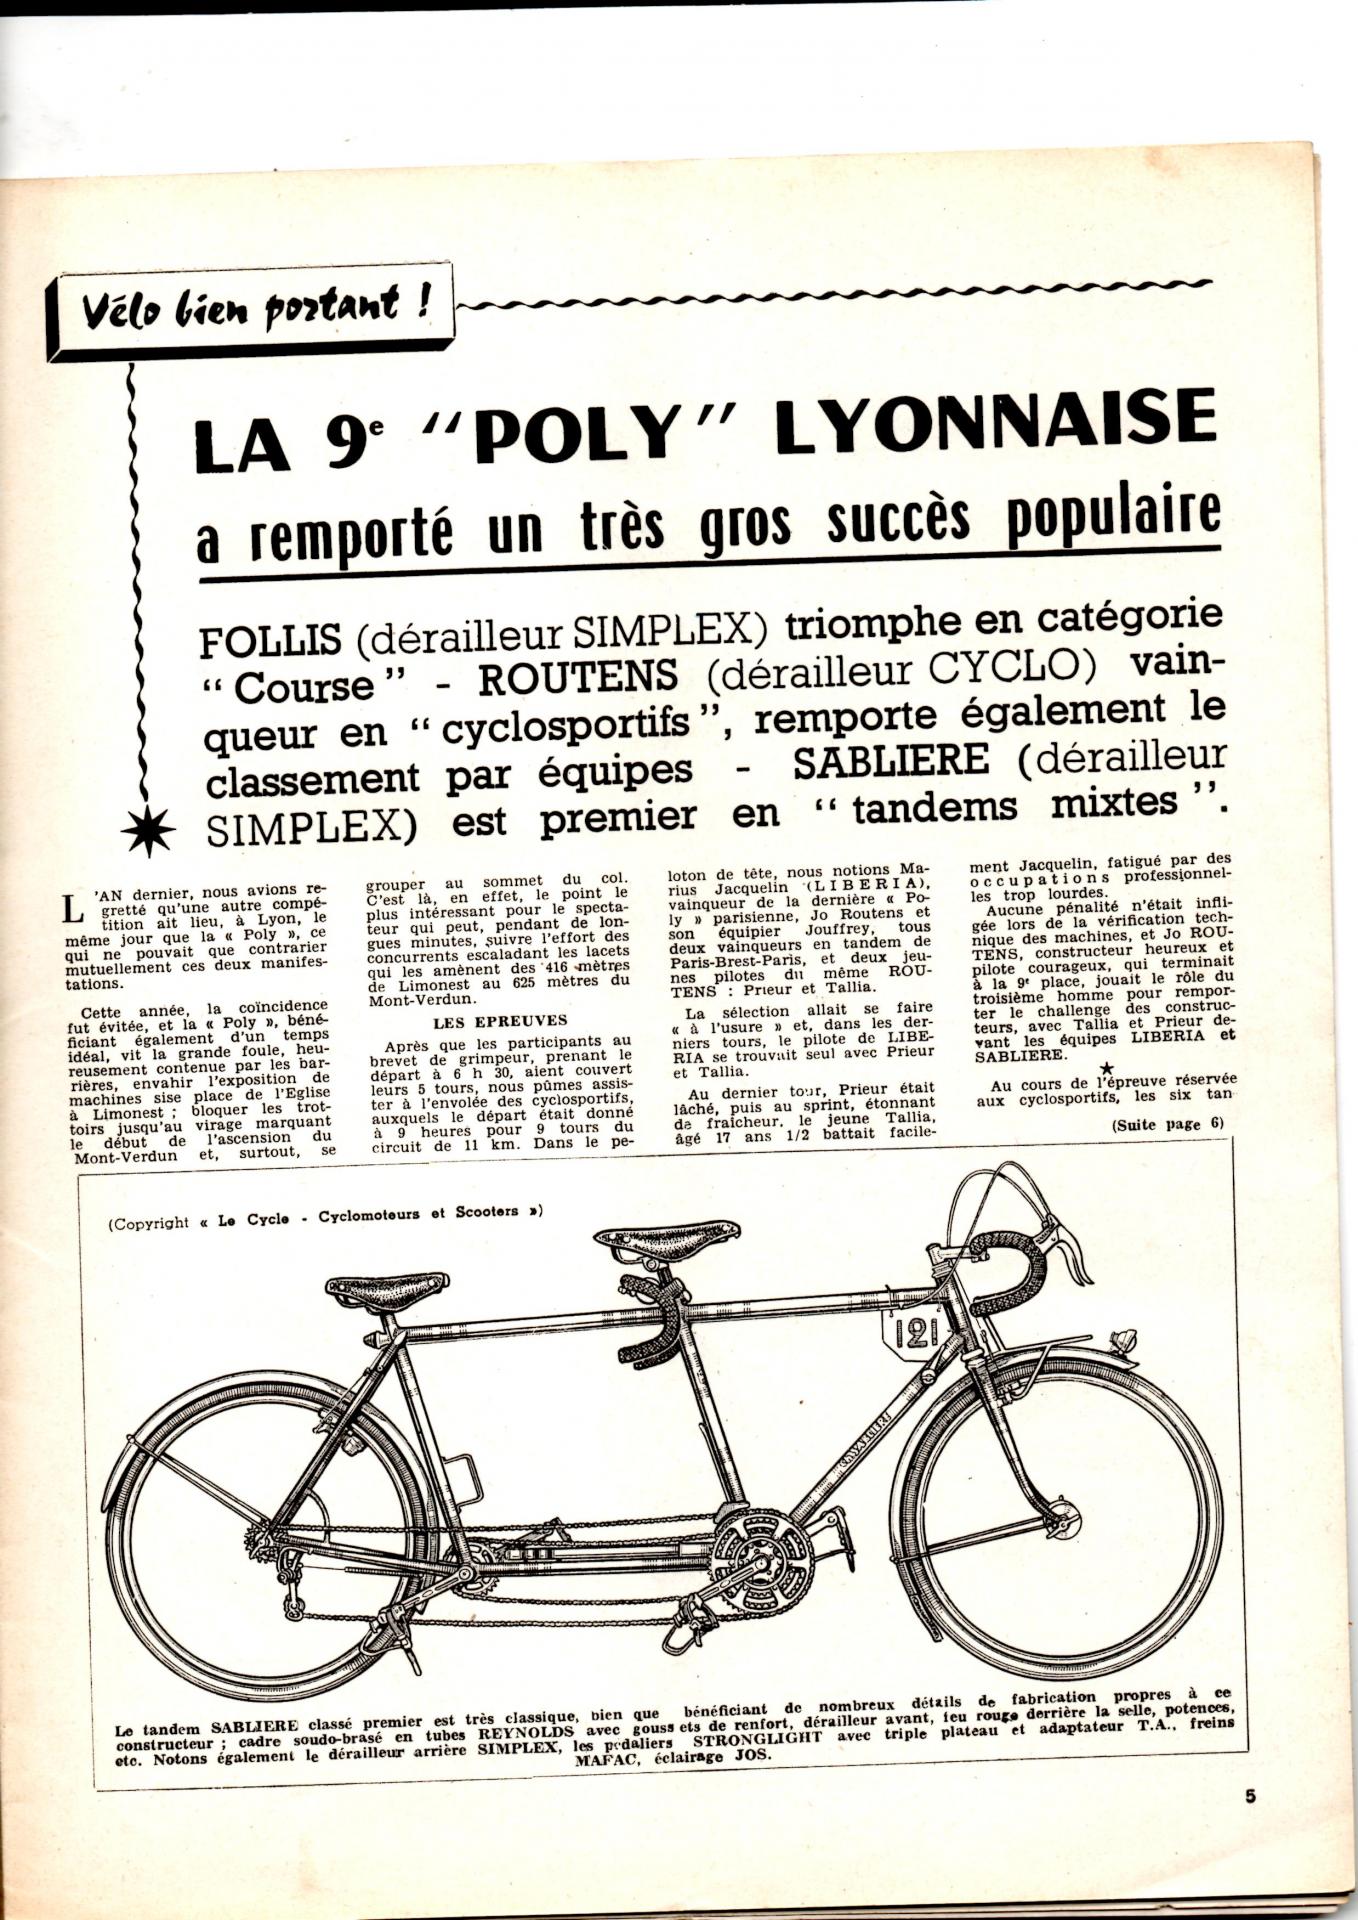 1956 poly lyonnaise 01